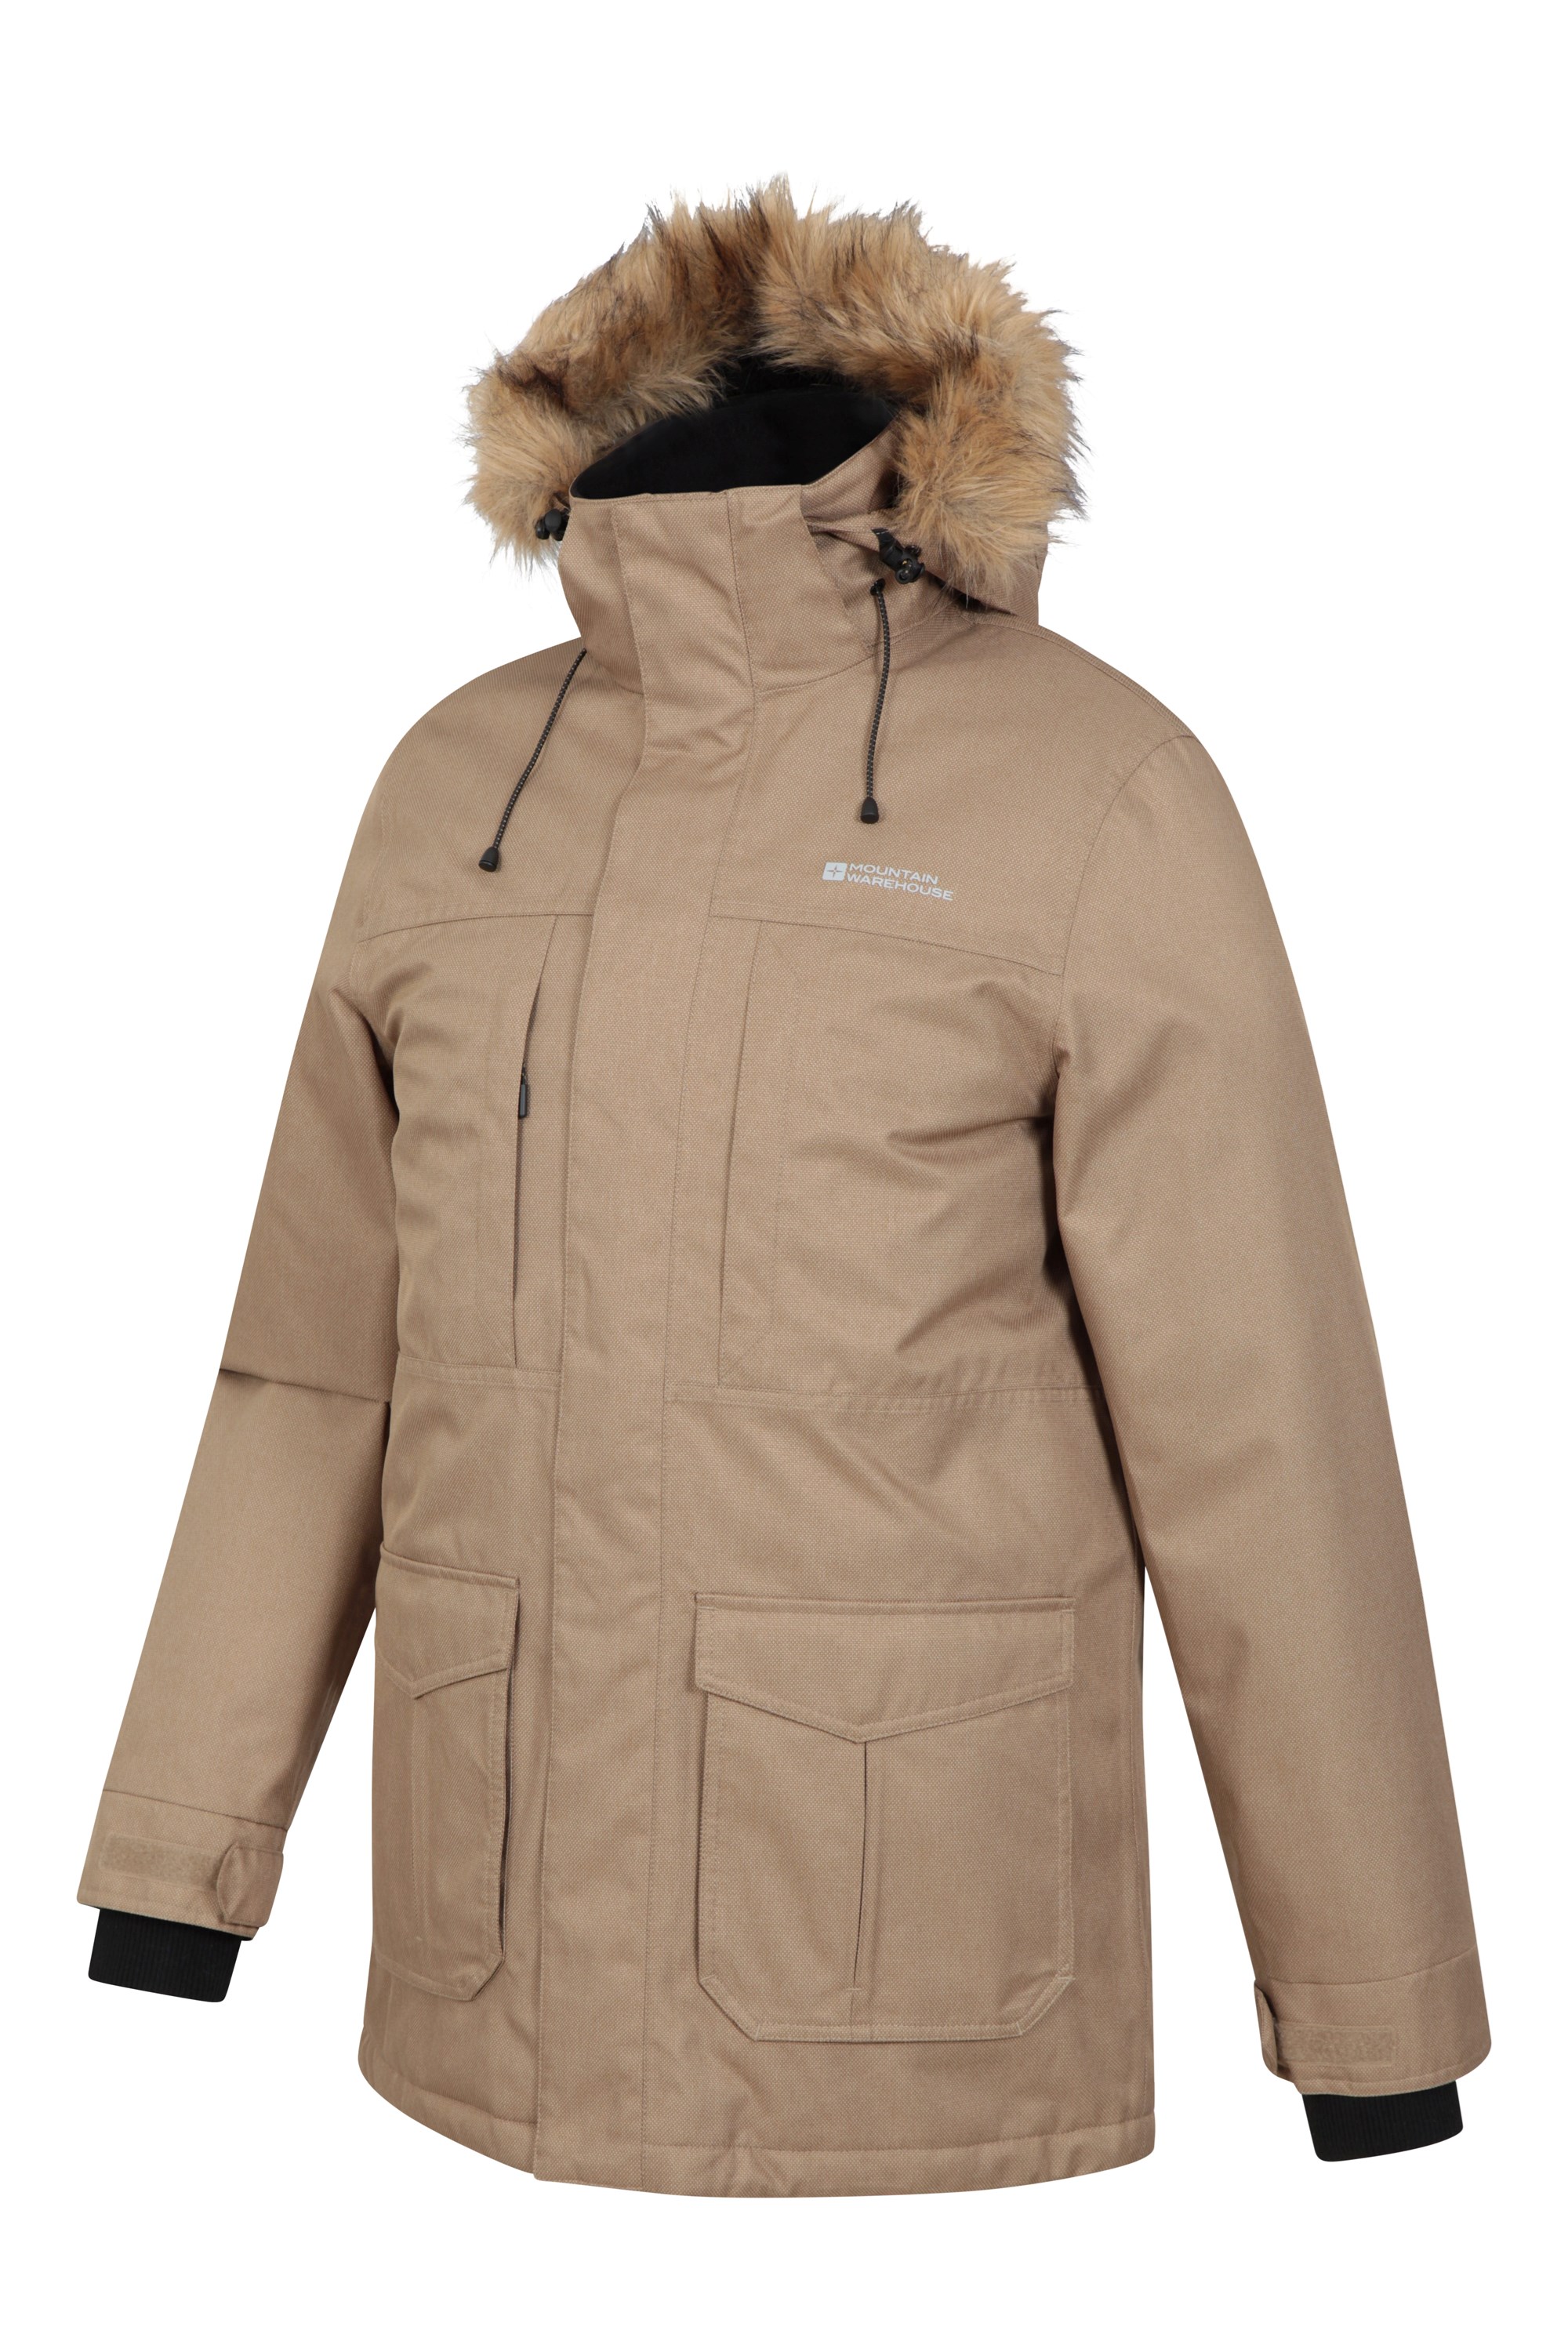 Mens Winter Trench Coat Long Jacket Lapel Neck Outwear Single Breasted  Overcoat | eBay